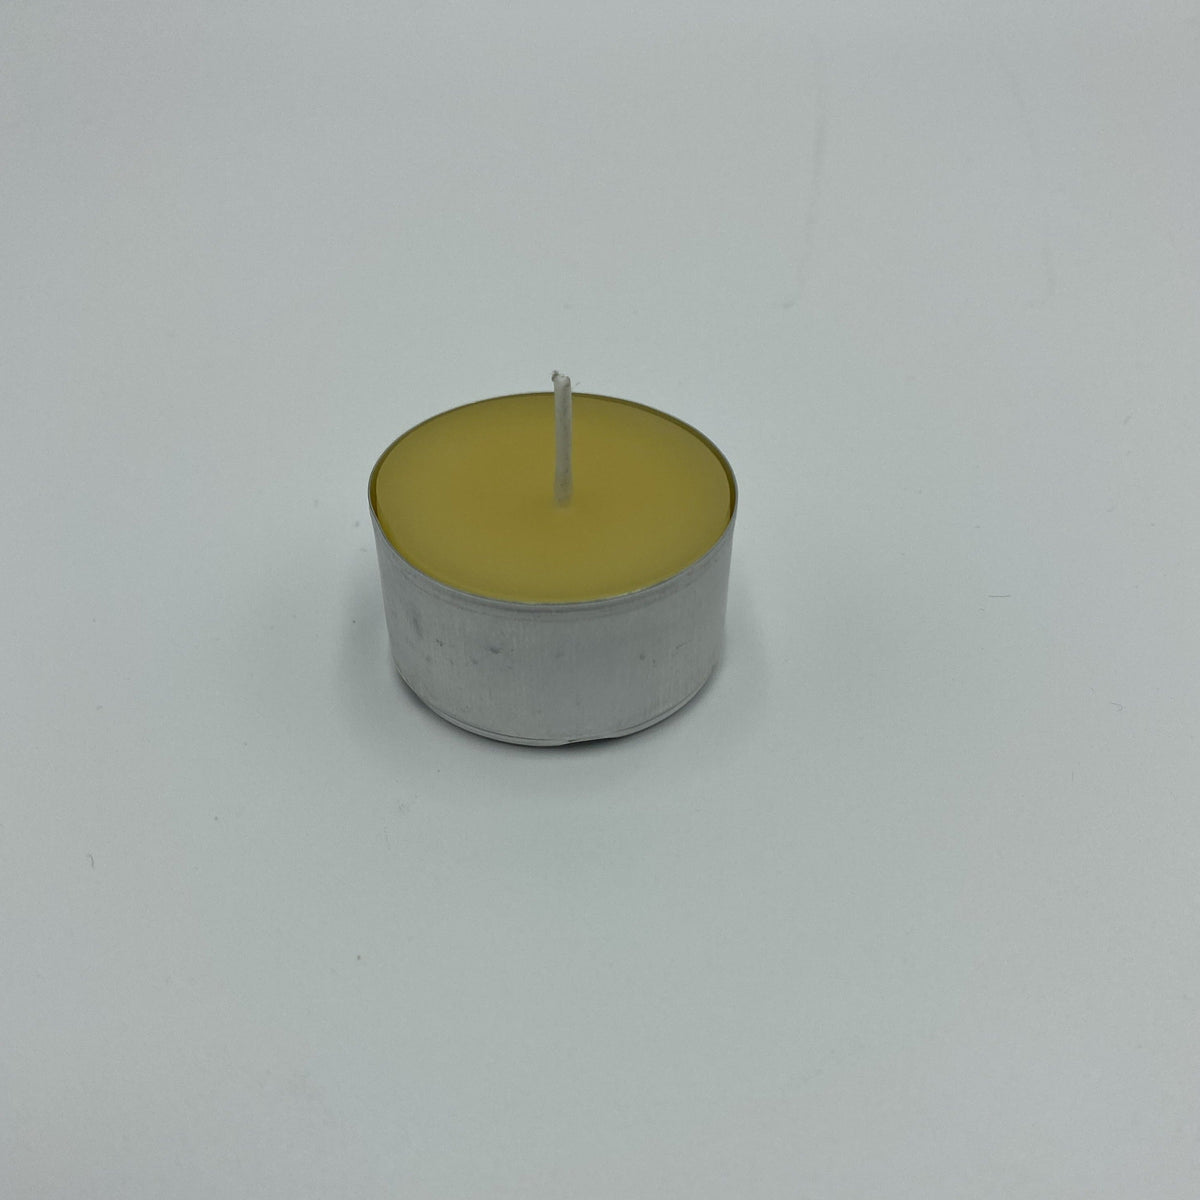 Set of 6 Canadian Beeswax Tea Light Candles 100% Cotton Wick - Green Ash Decor